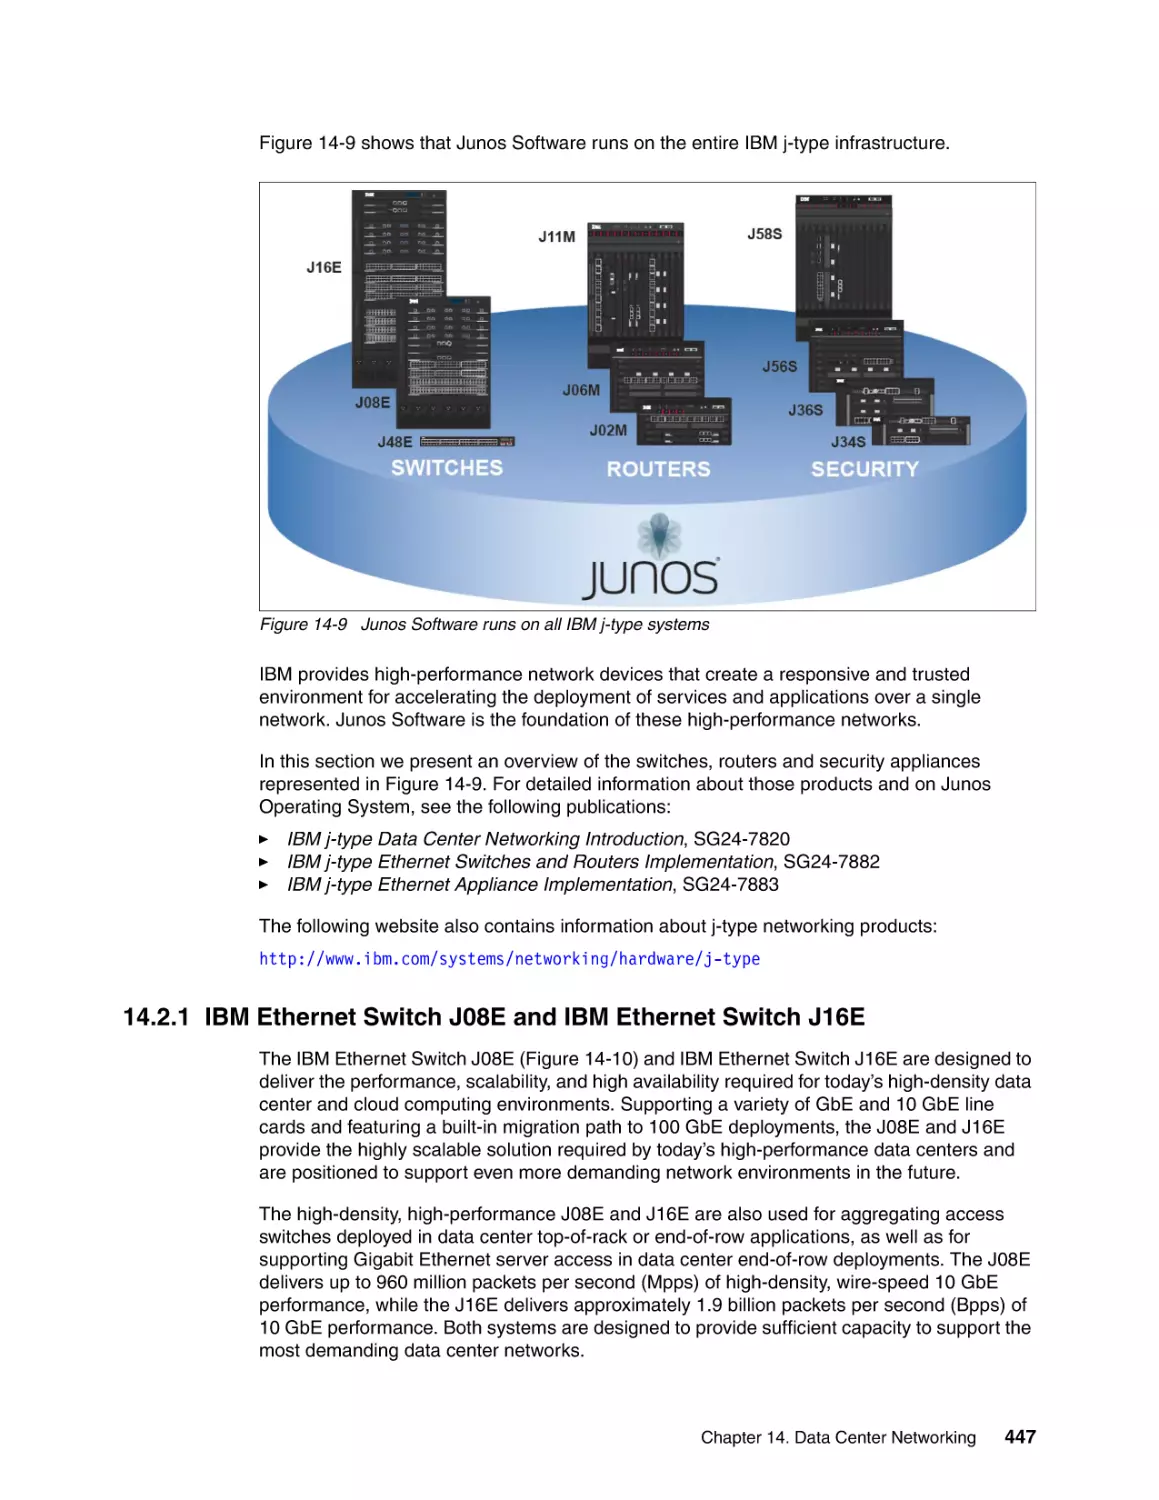 14.2.1 IBM Ethernet Switch J08E and IBM Ethernet Switch J16E